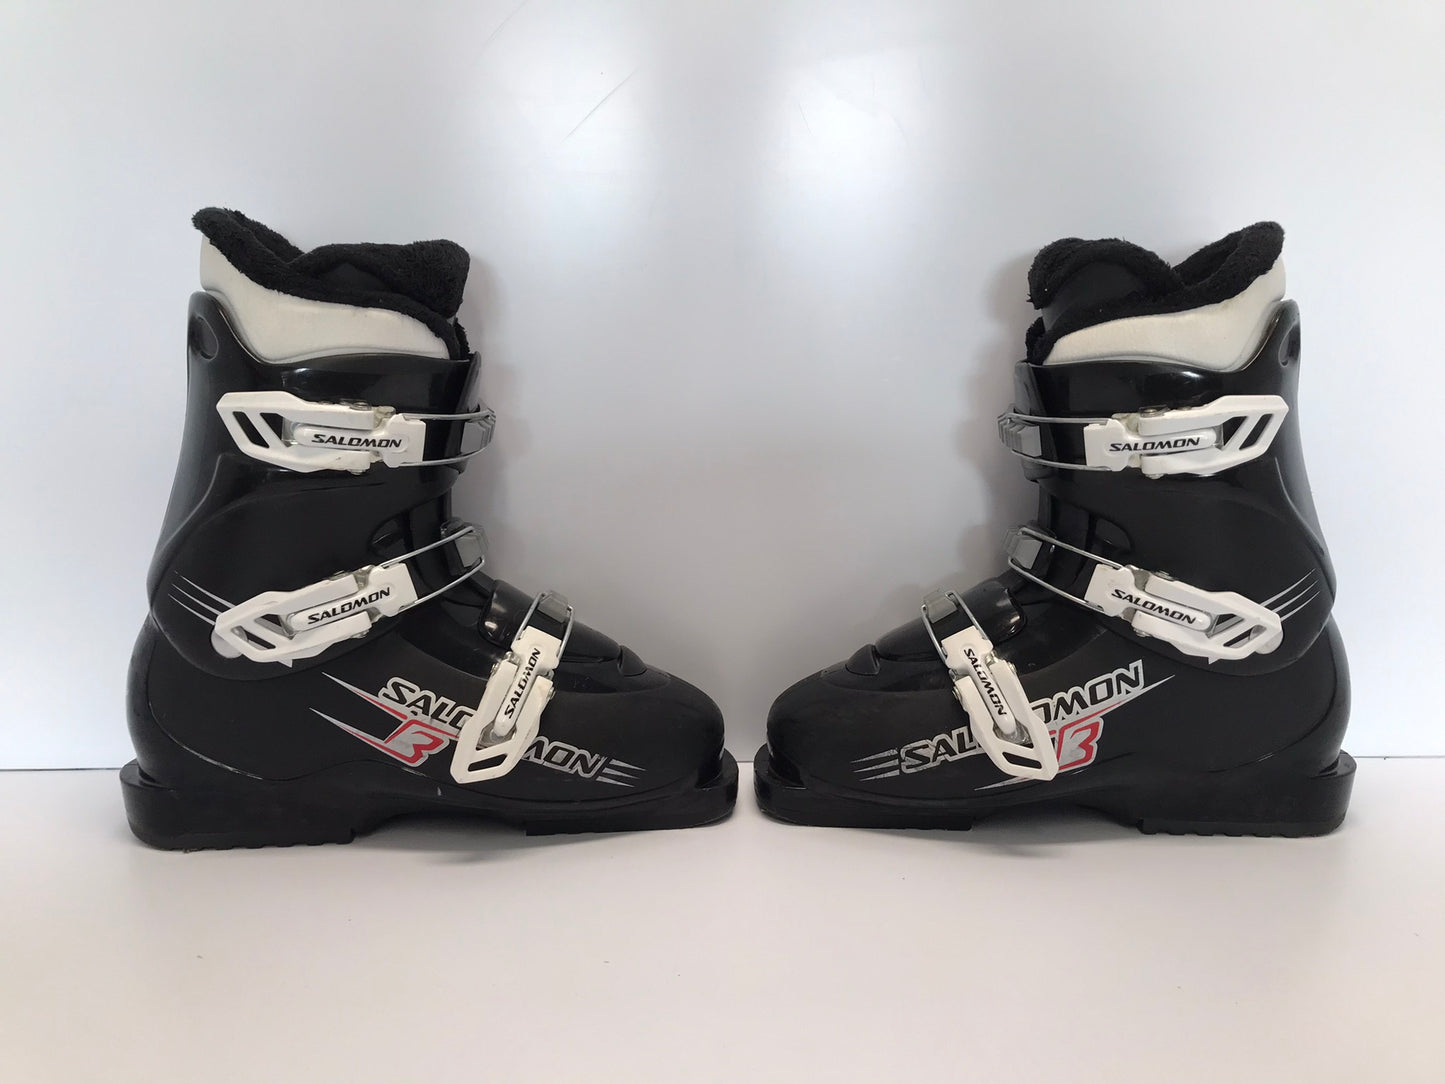 Ski Boots Mondo Size 24.5 Men's Size 6.5 Ladies Size 7.5 285 mm Salomon Black White Like New